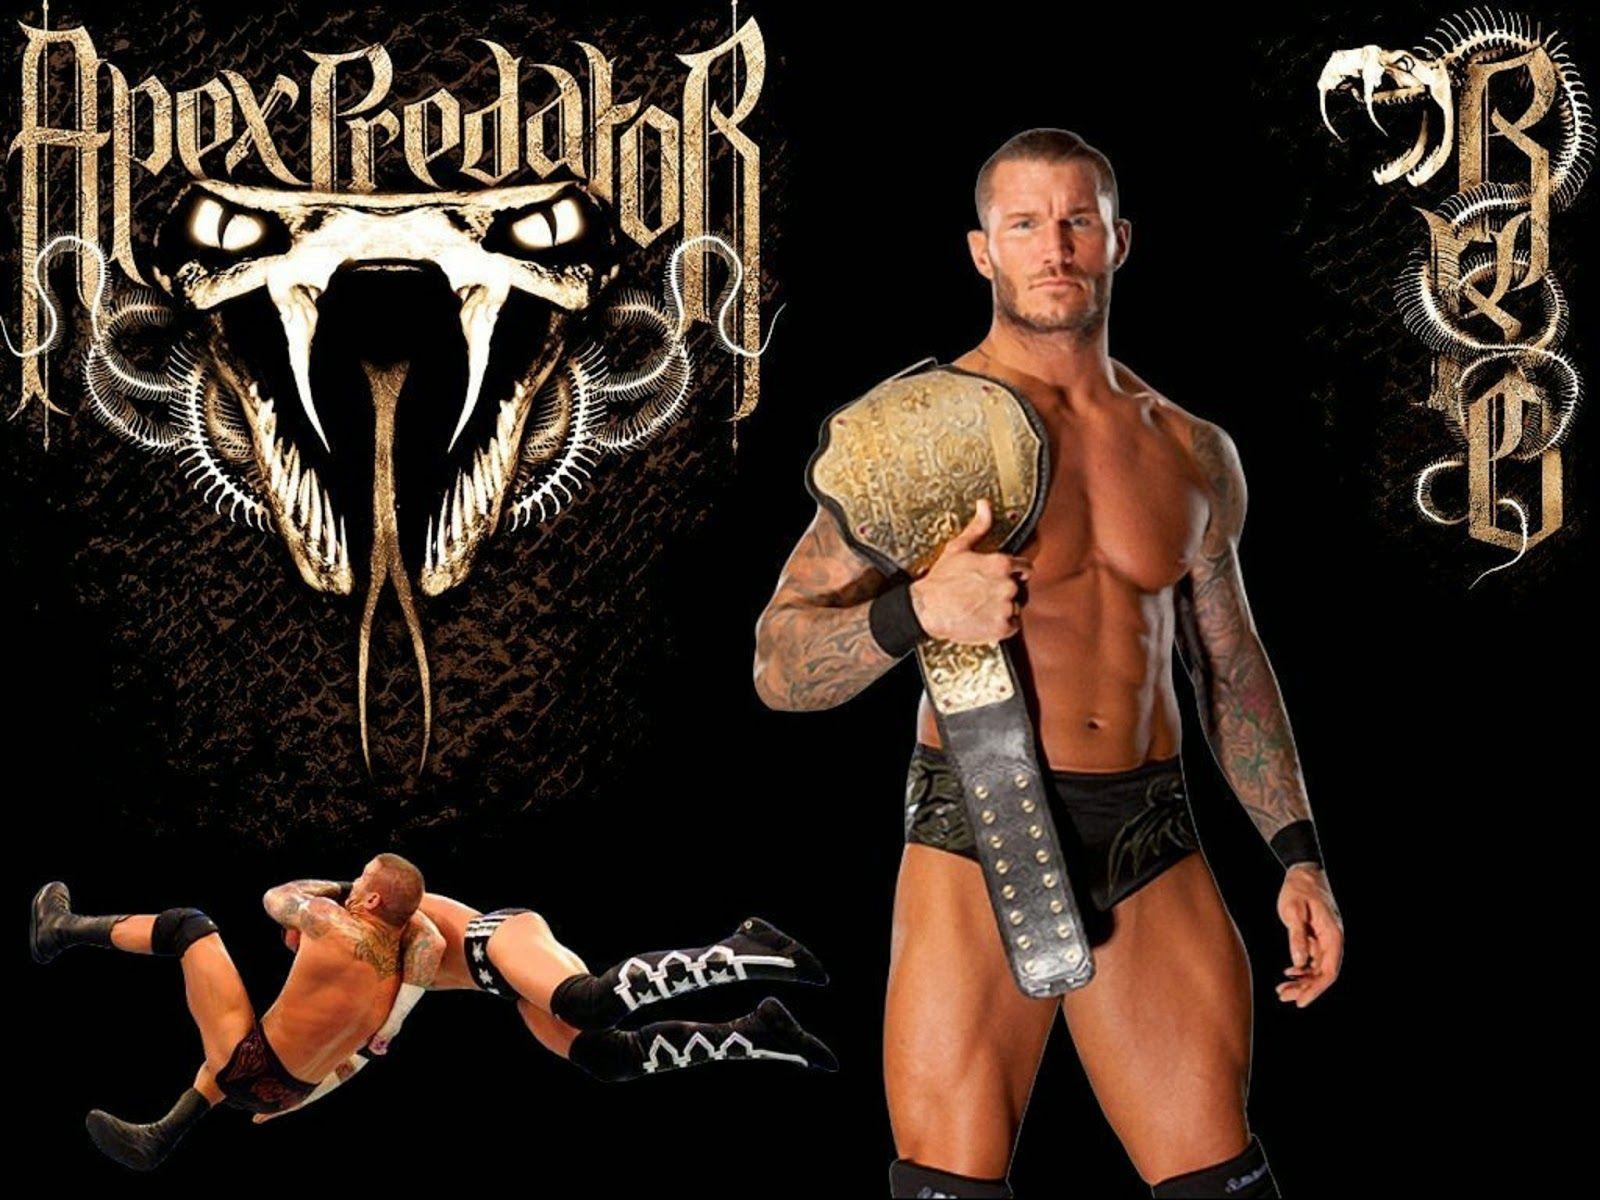 Randy Orton Wallpaper Free Download. HD Wallpaper, Background